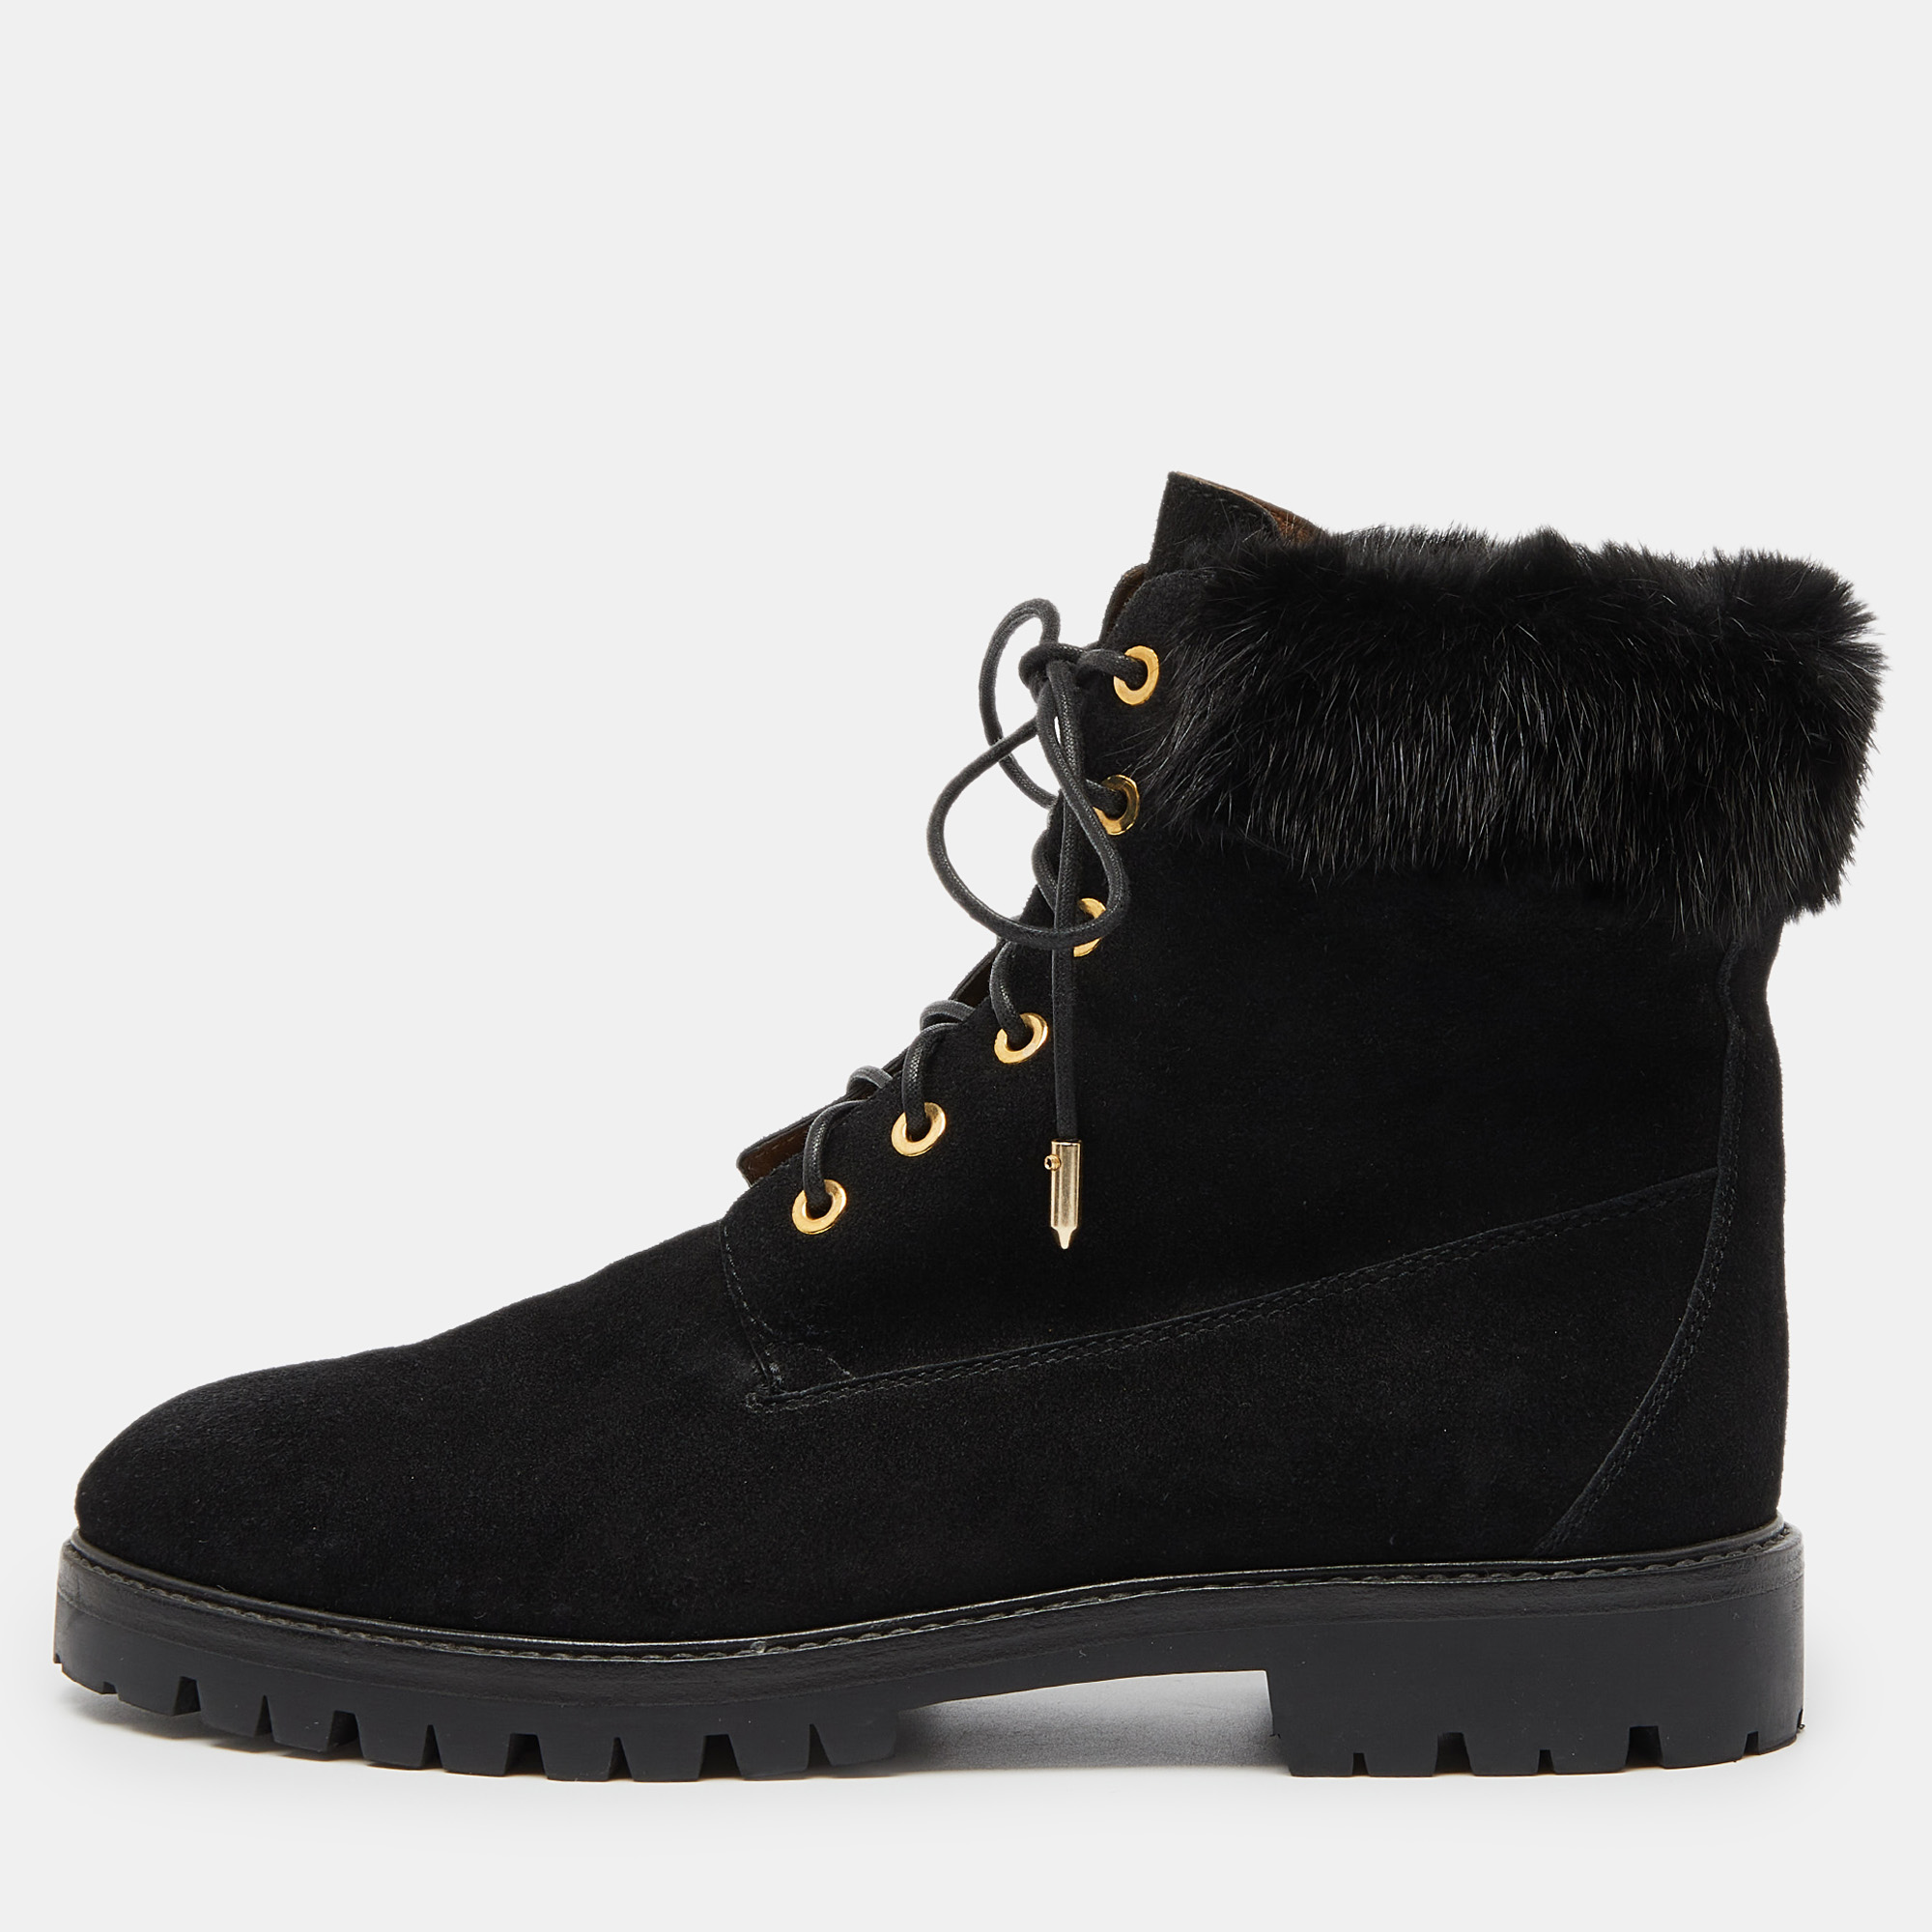 Aquazzura black suede and fur ankle boots size 40